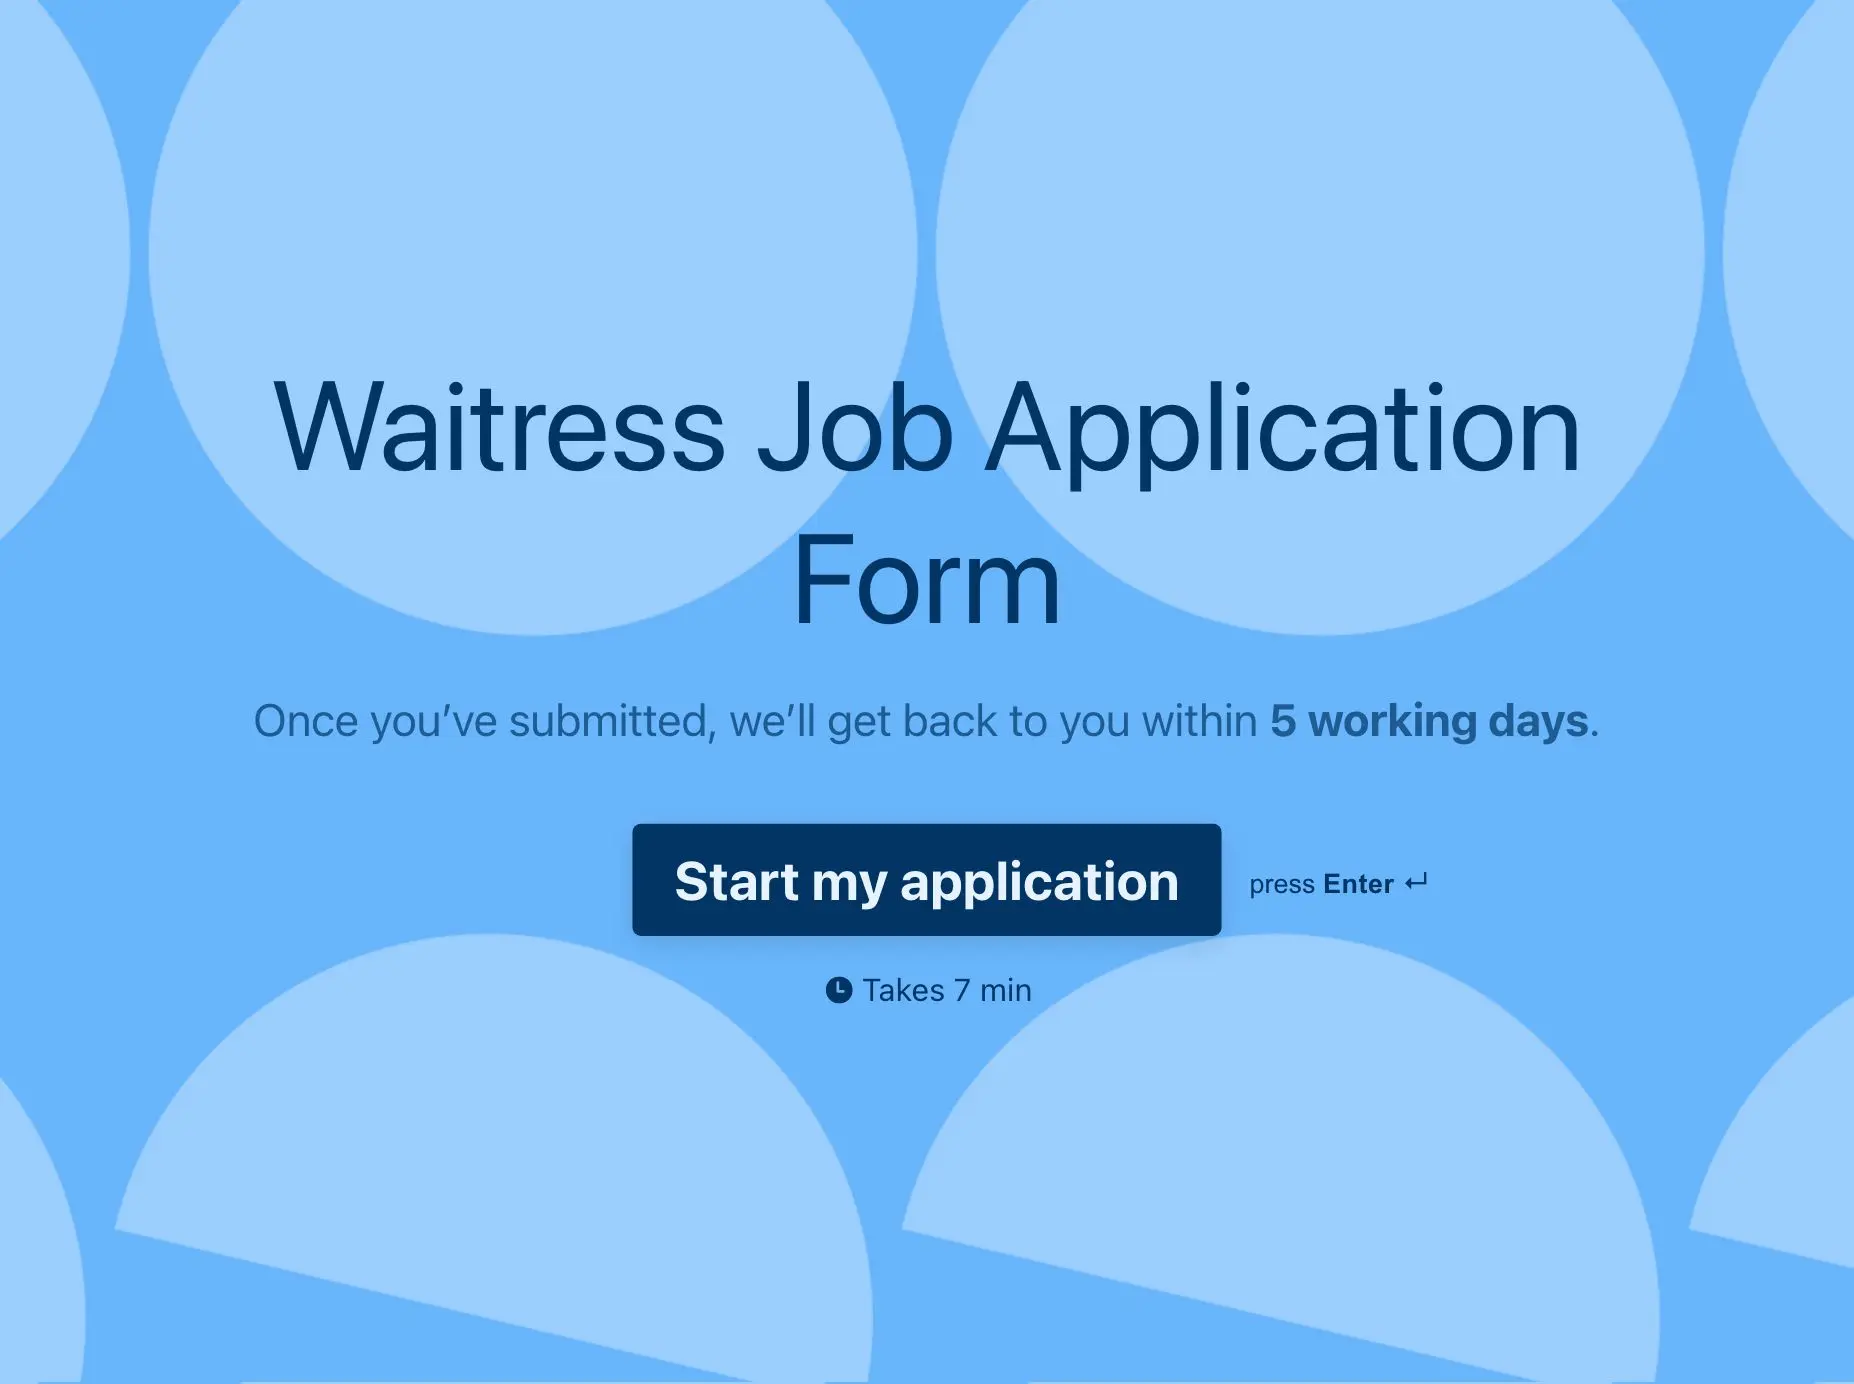 Waitress Job Application Form Template Hero